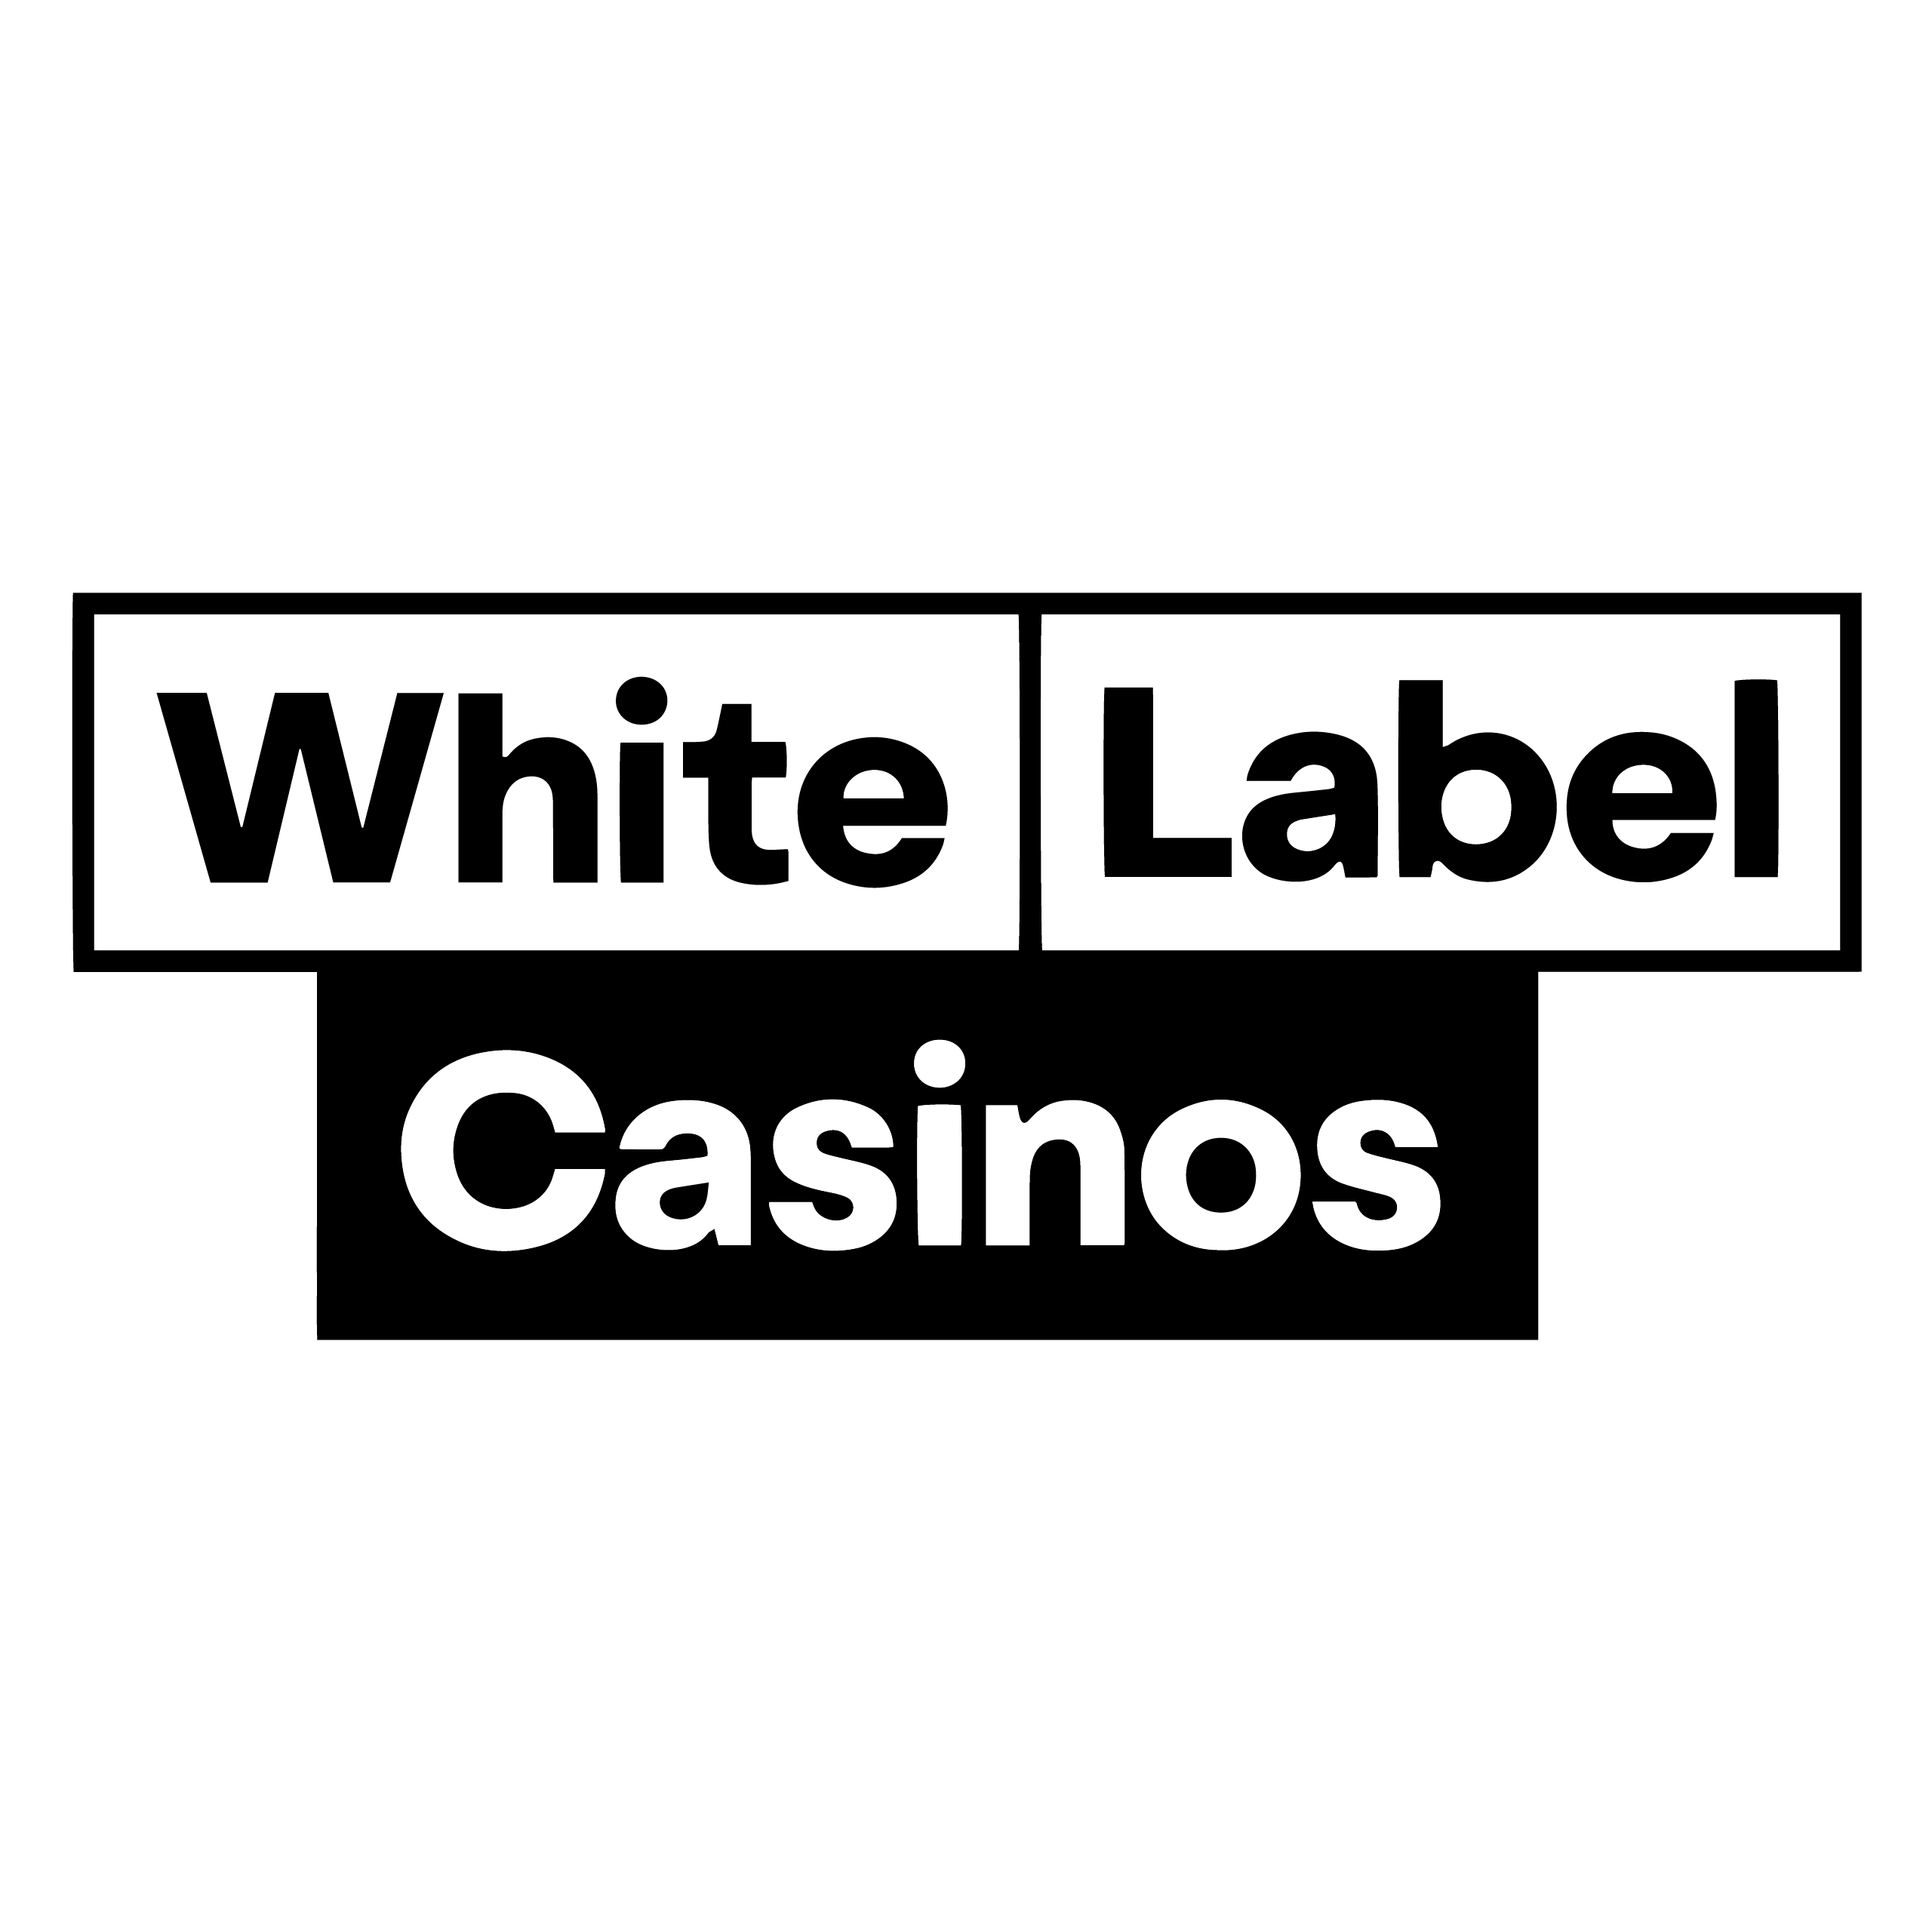 White Label Casinos